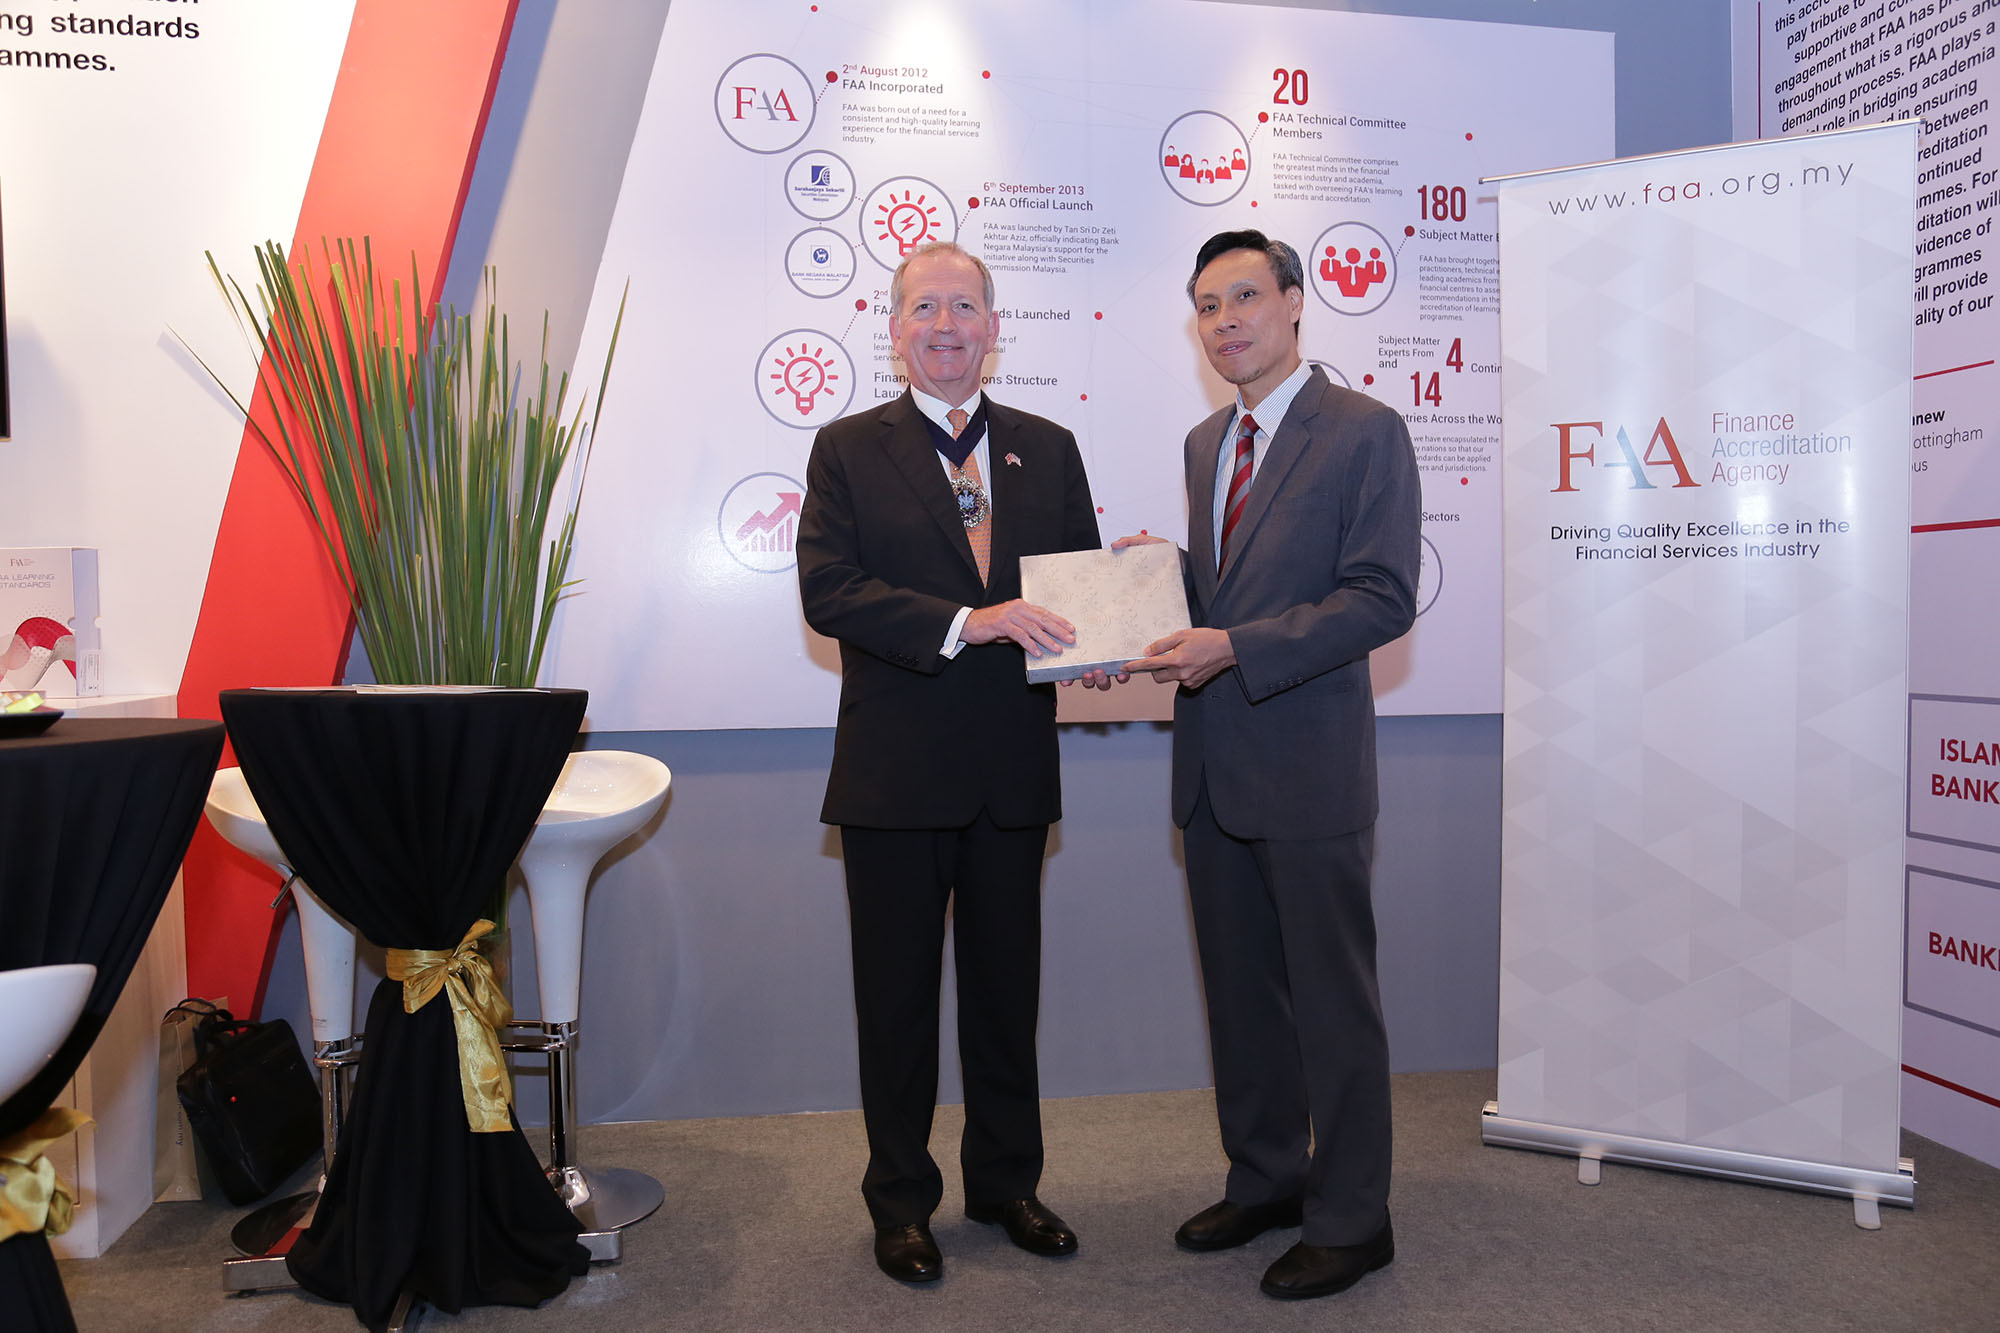 IFN Asia Forum 2015 Investors Day